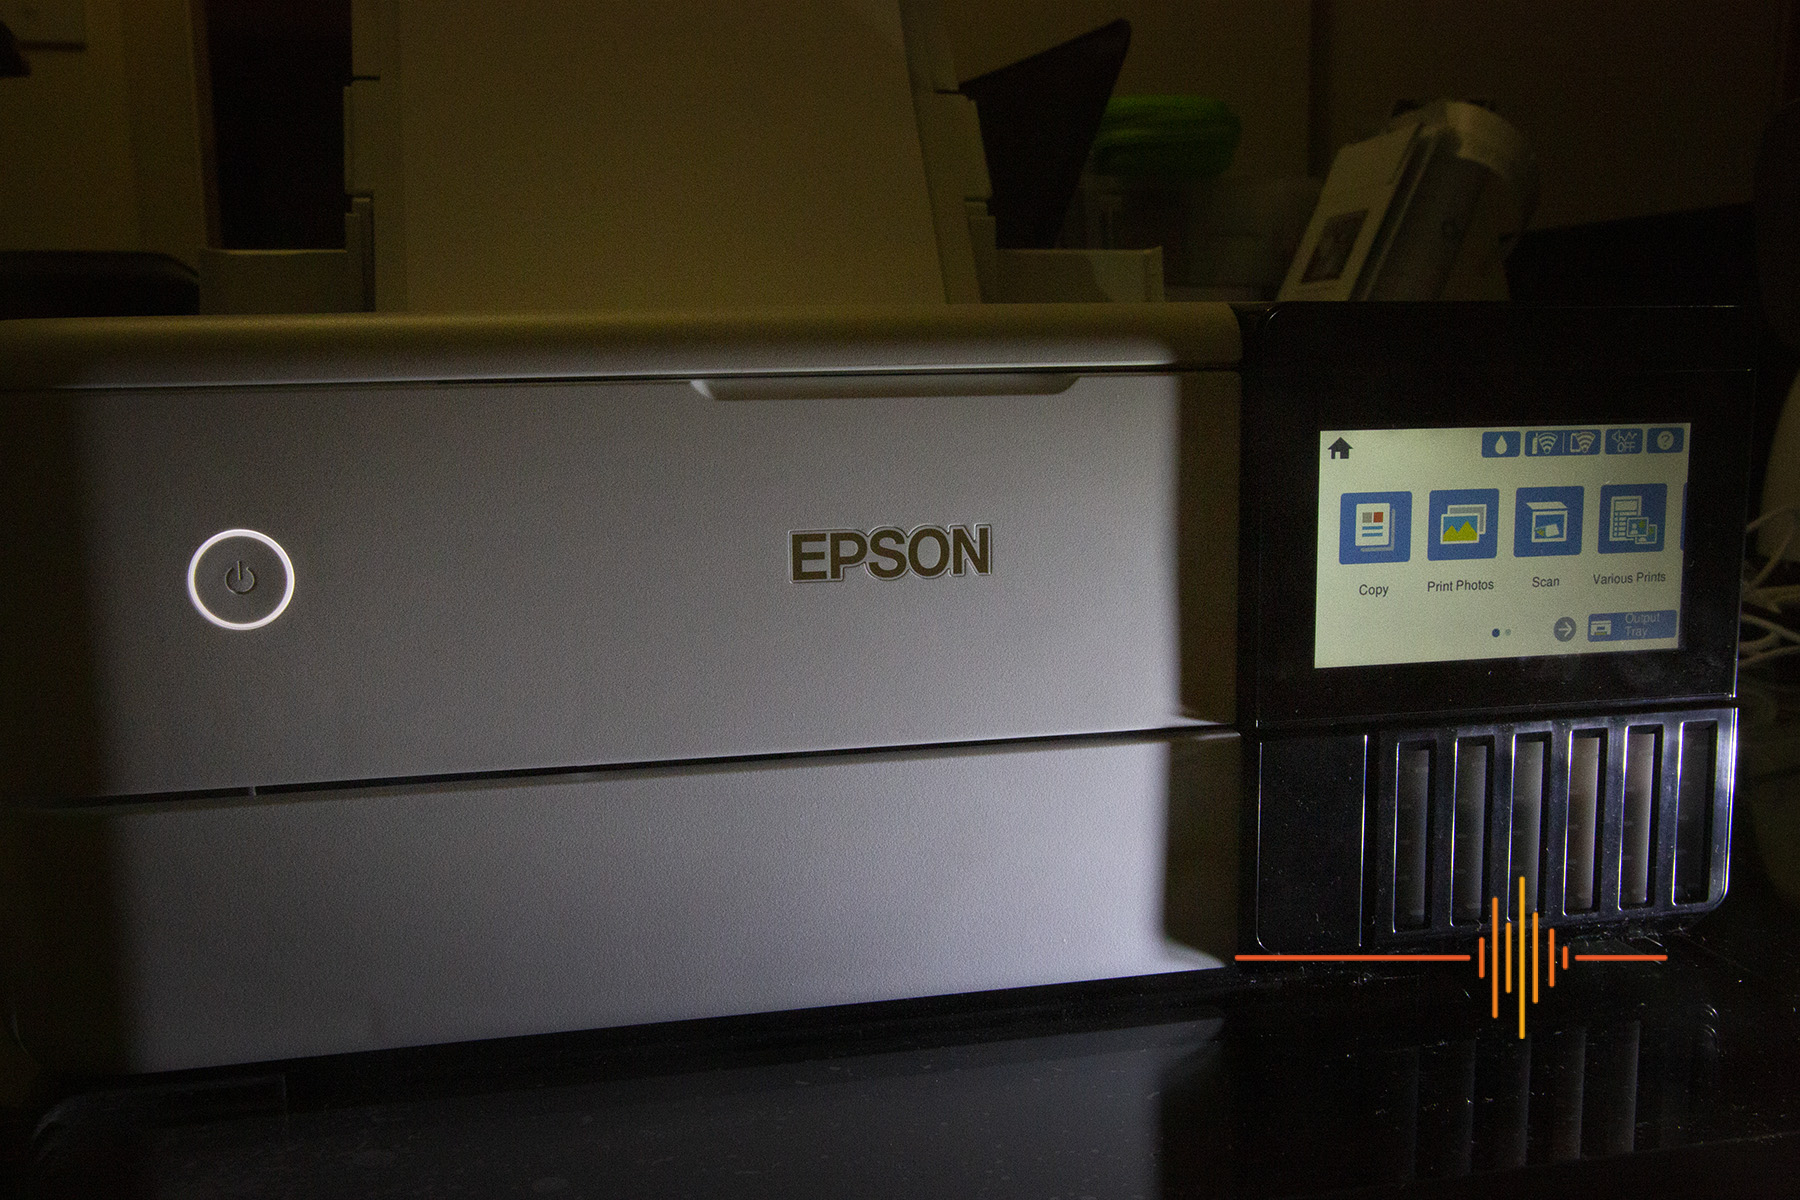 Epson Ecotank ET-8500 Review: Ink Tank Printer For Photo Fans